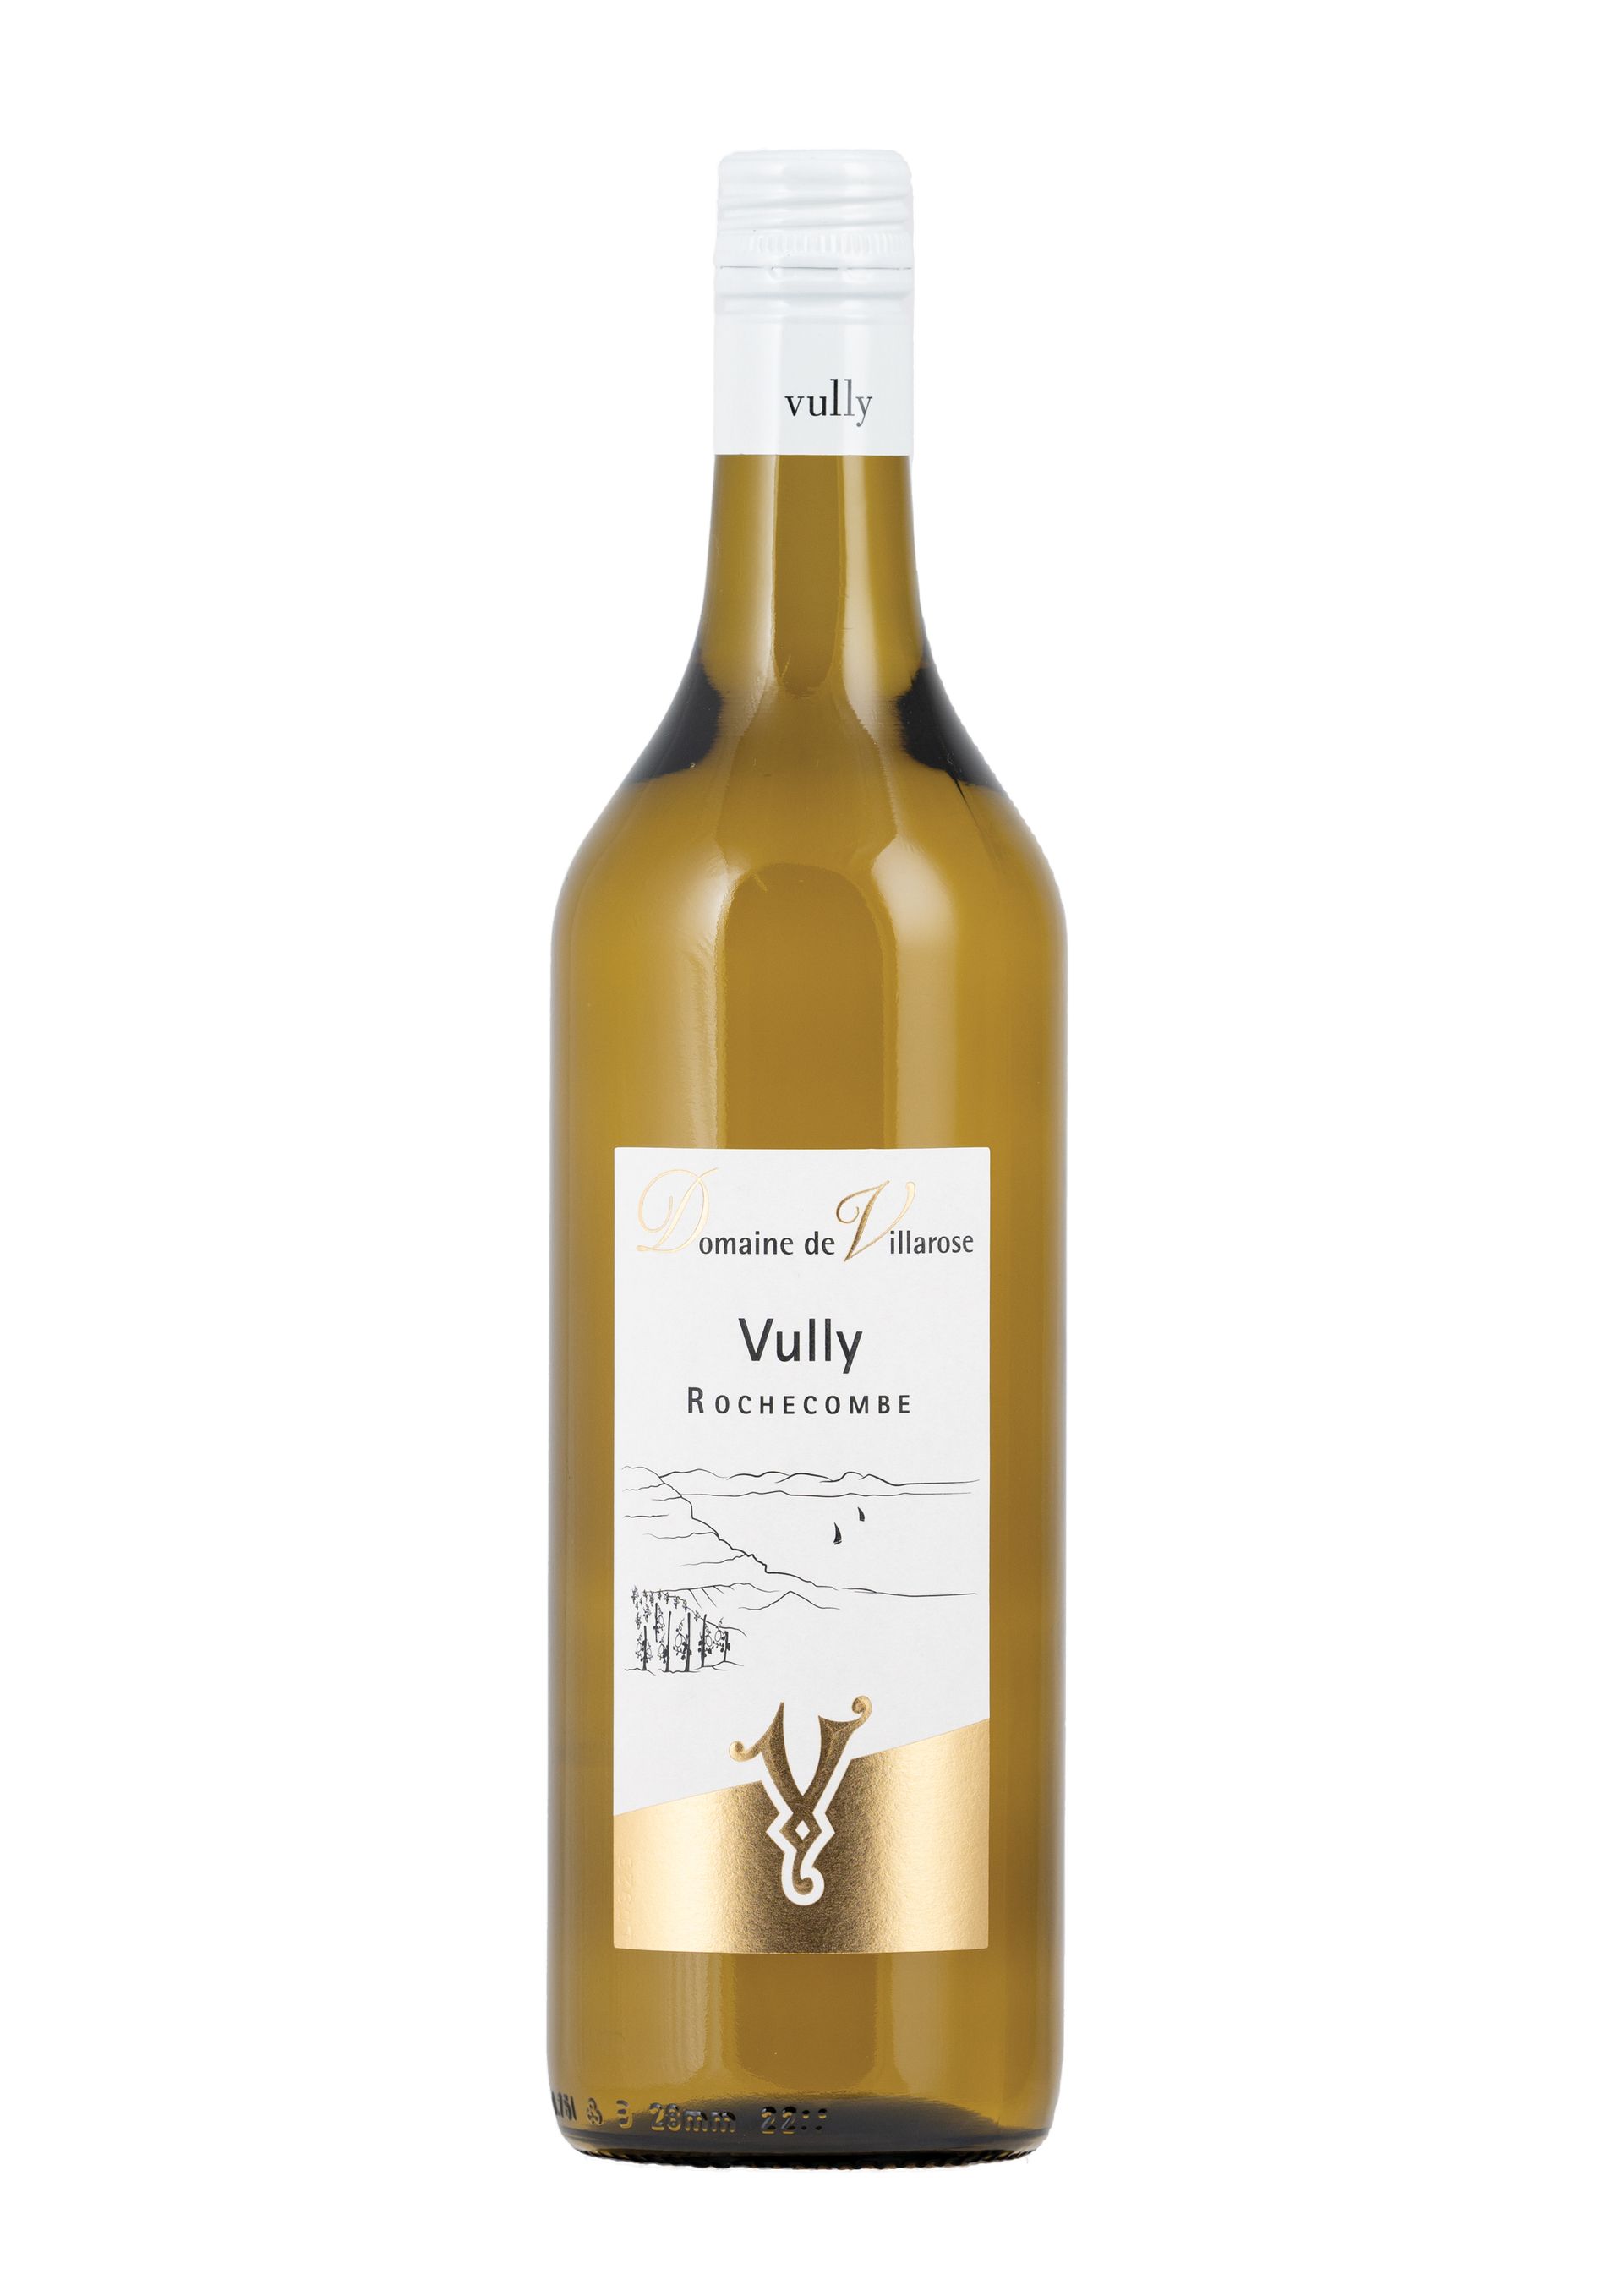 Vully blanc «Rochecombe» - Domaine de Villarose à Vully